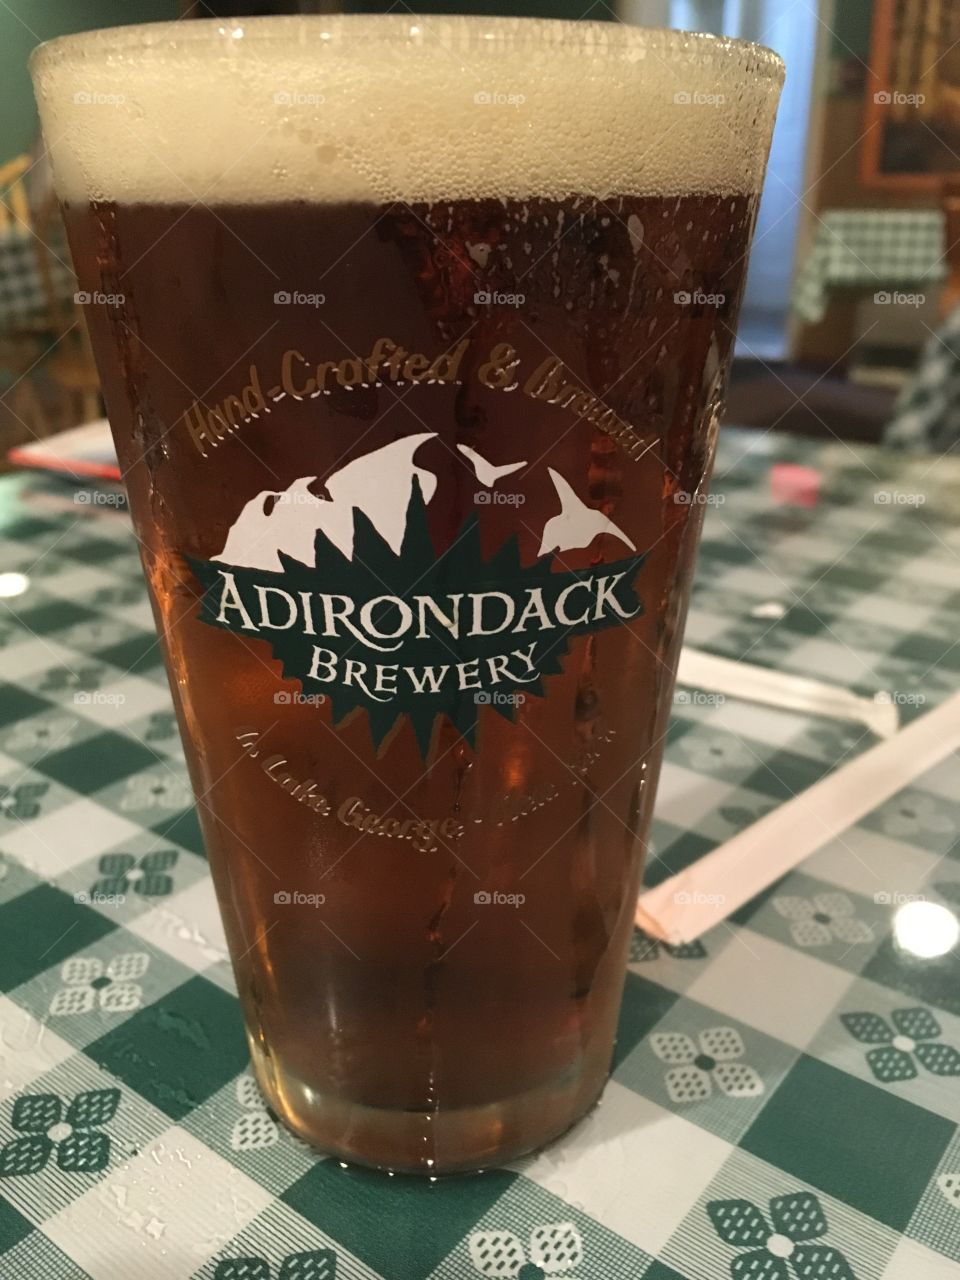 Adirondack beer